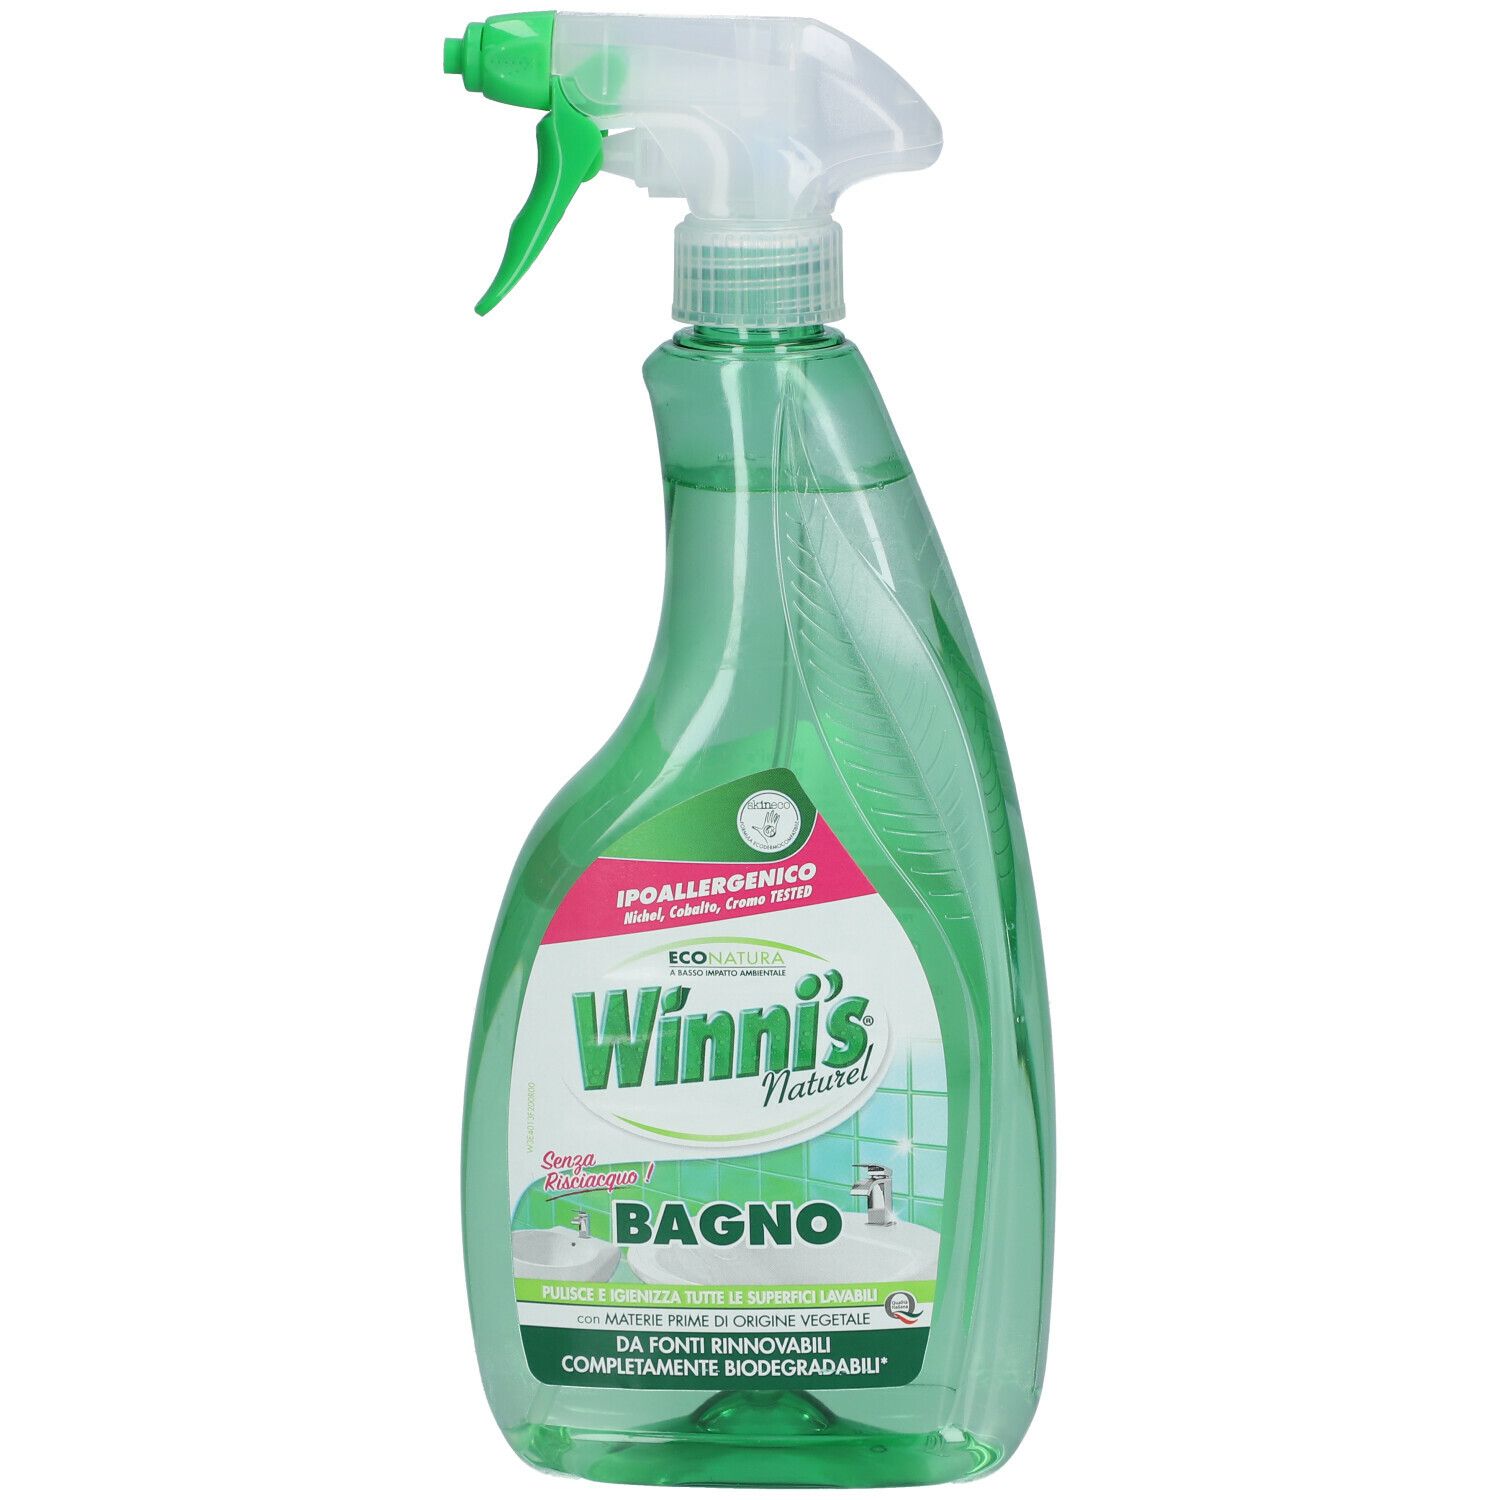 Winni's Naturel Bagno Trigger 750 ml